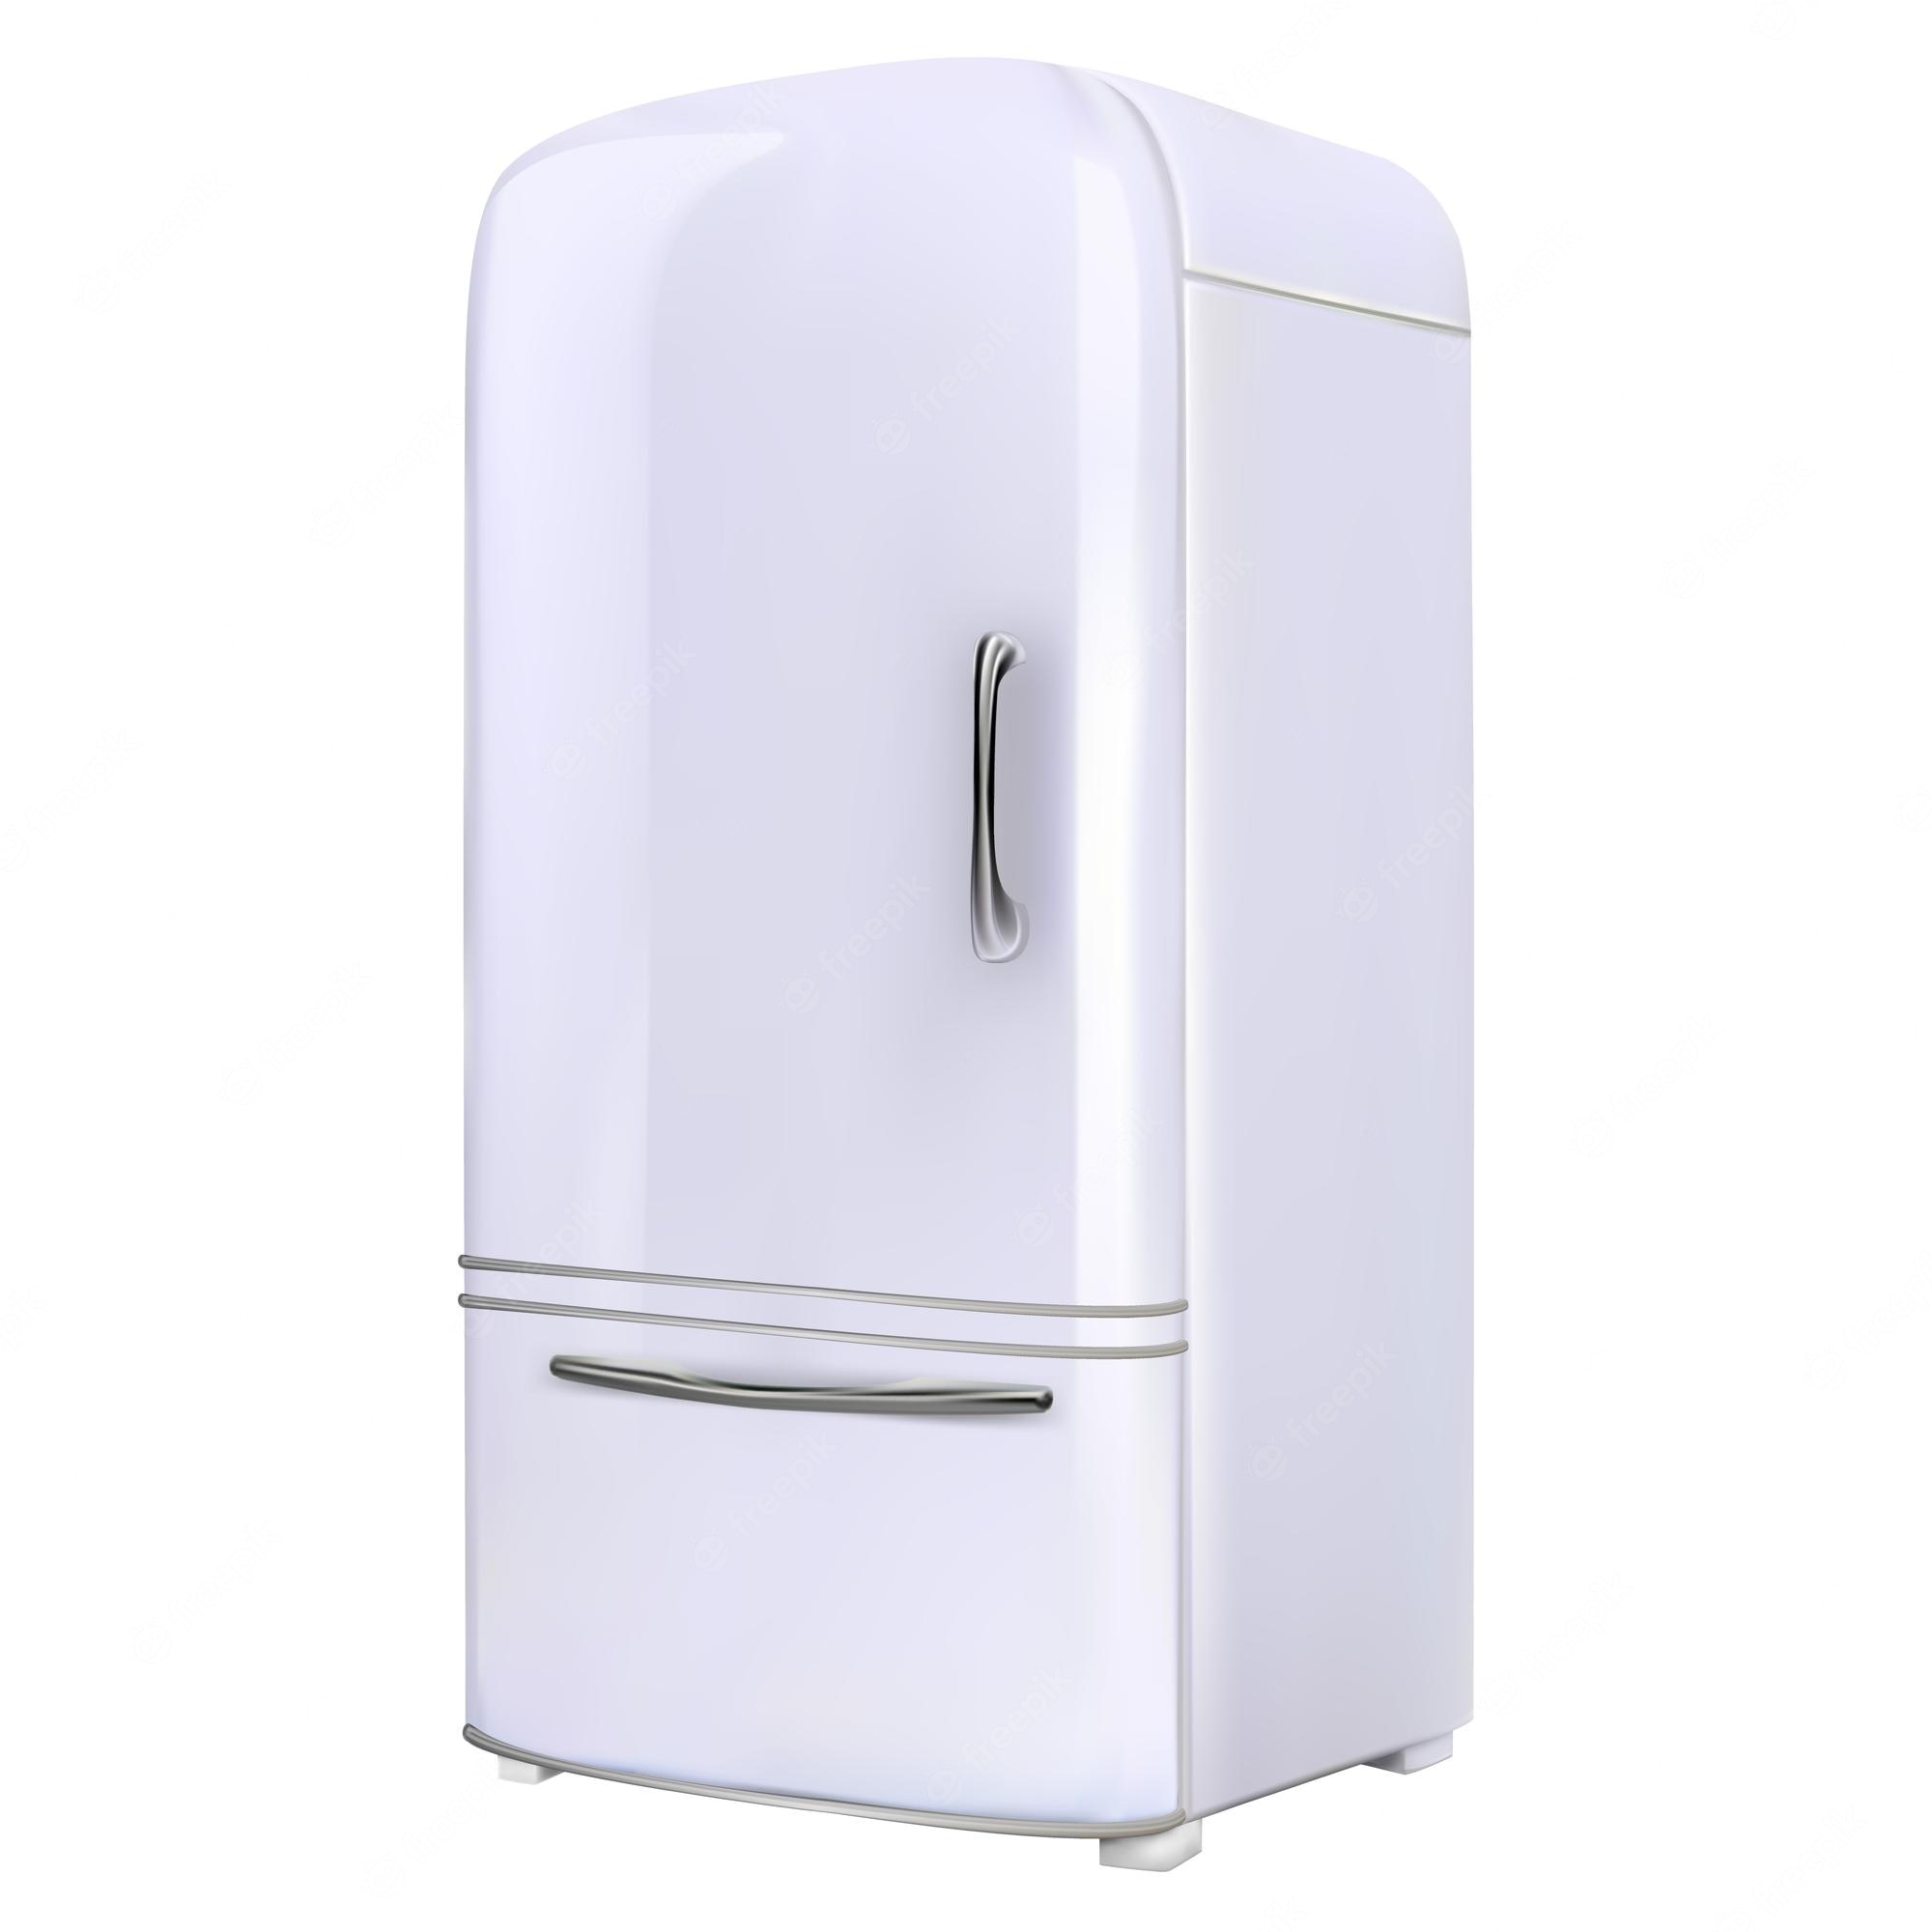 Refrigerator Clipart, Fridge Clip Art, Retro Vintage Refrigerator ...